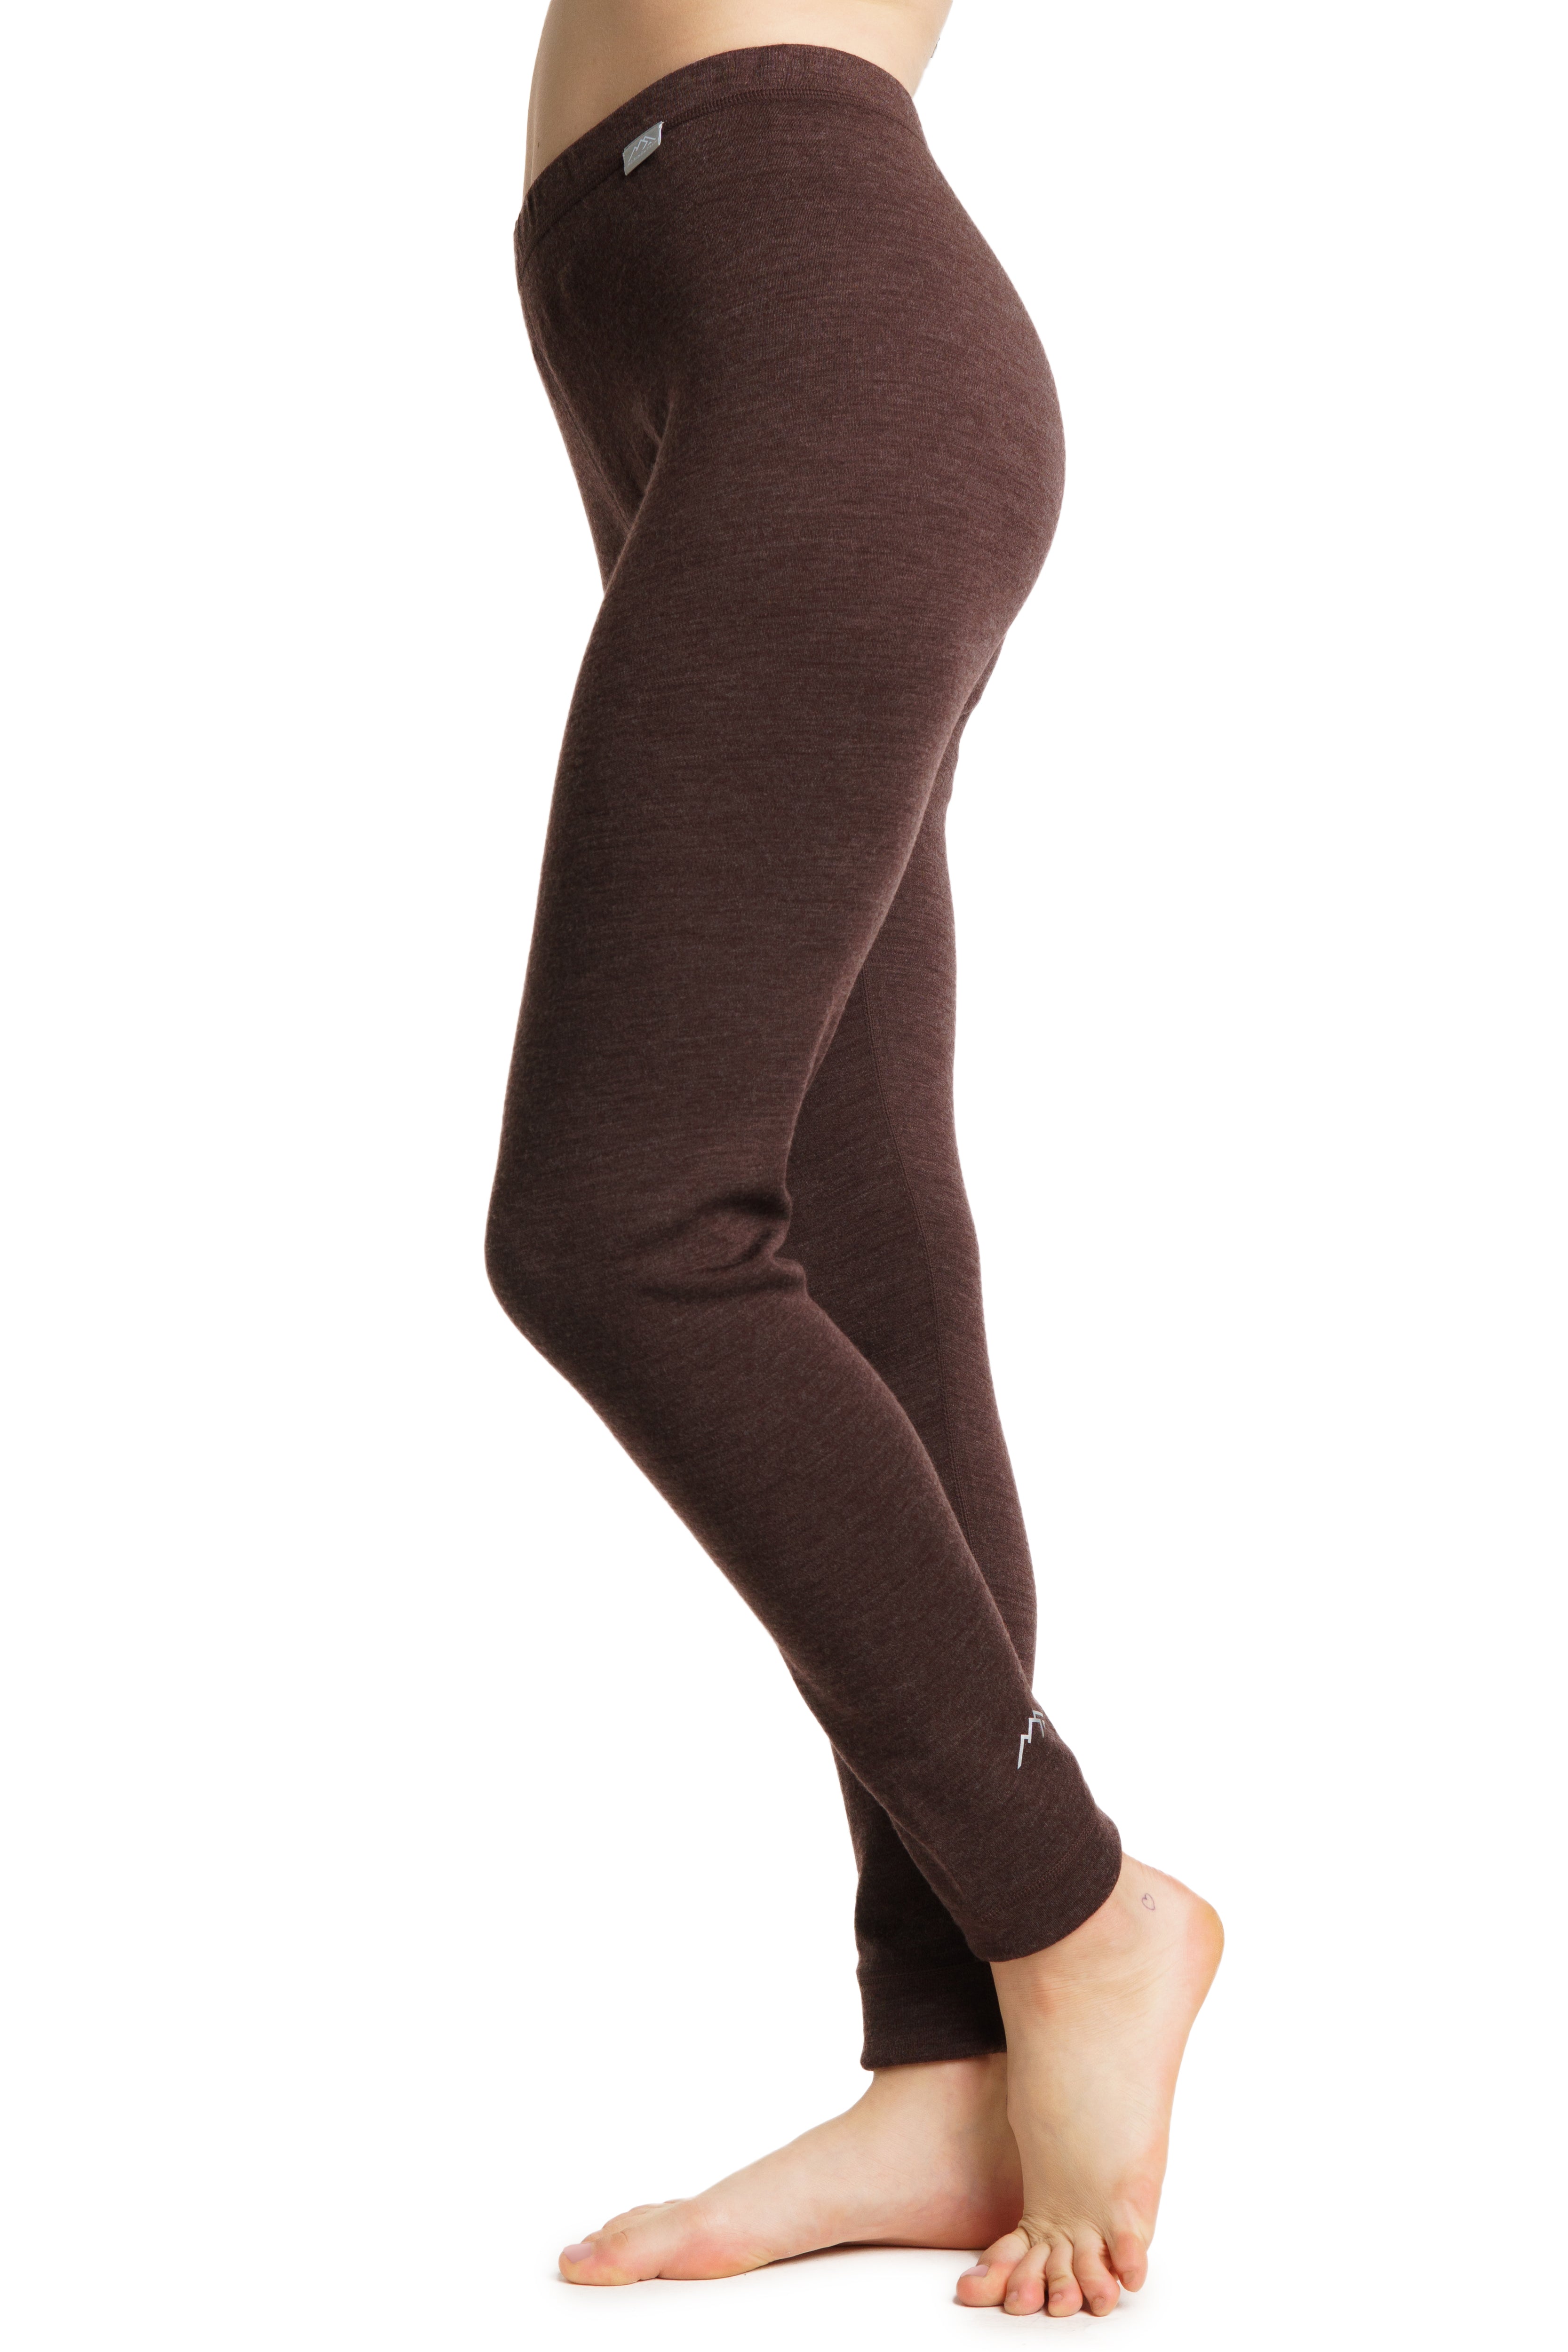 Women's Merino Wool Pants - Base Layer Chocolate, Bottom, Underwear, Thermal  Leggings, Midweight